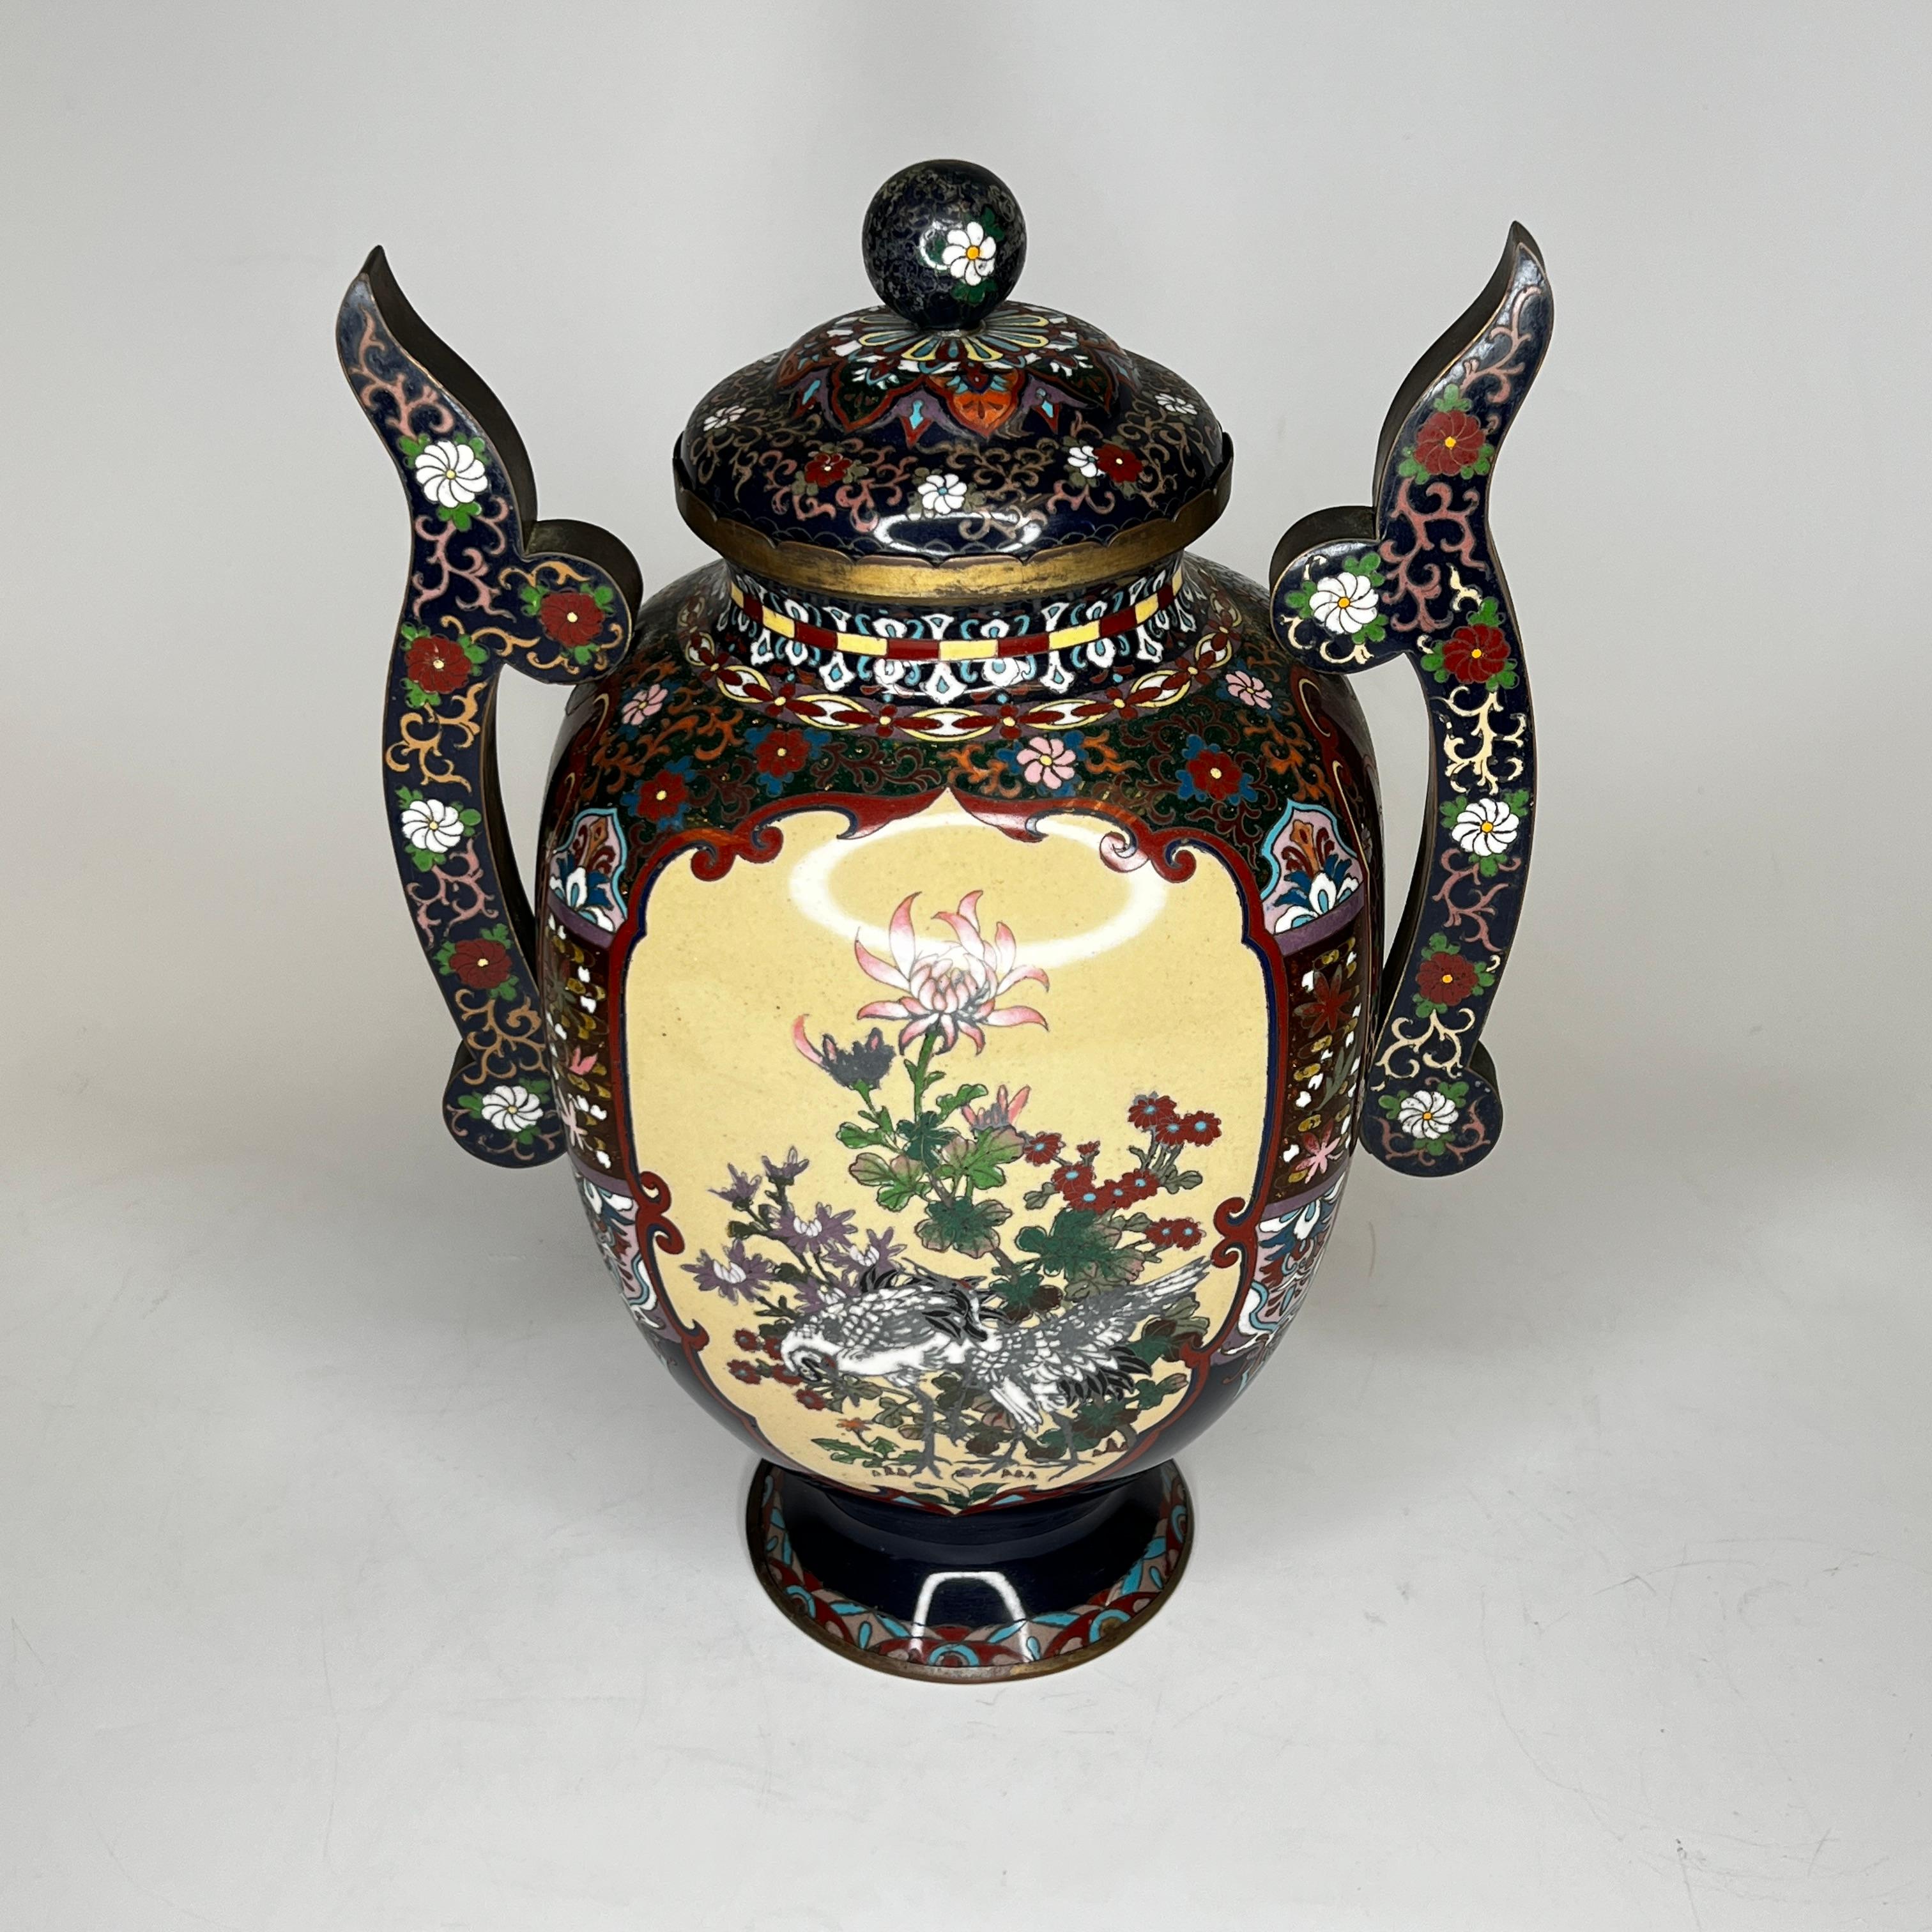 19th Century Japanese Meiji Period Cloisonne Enamel Covered Vase